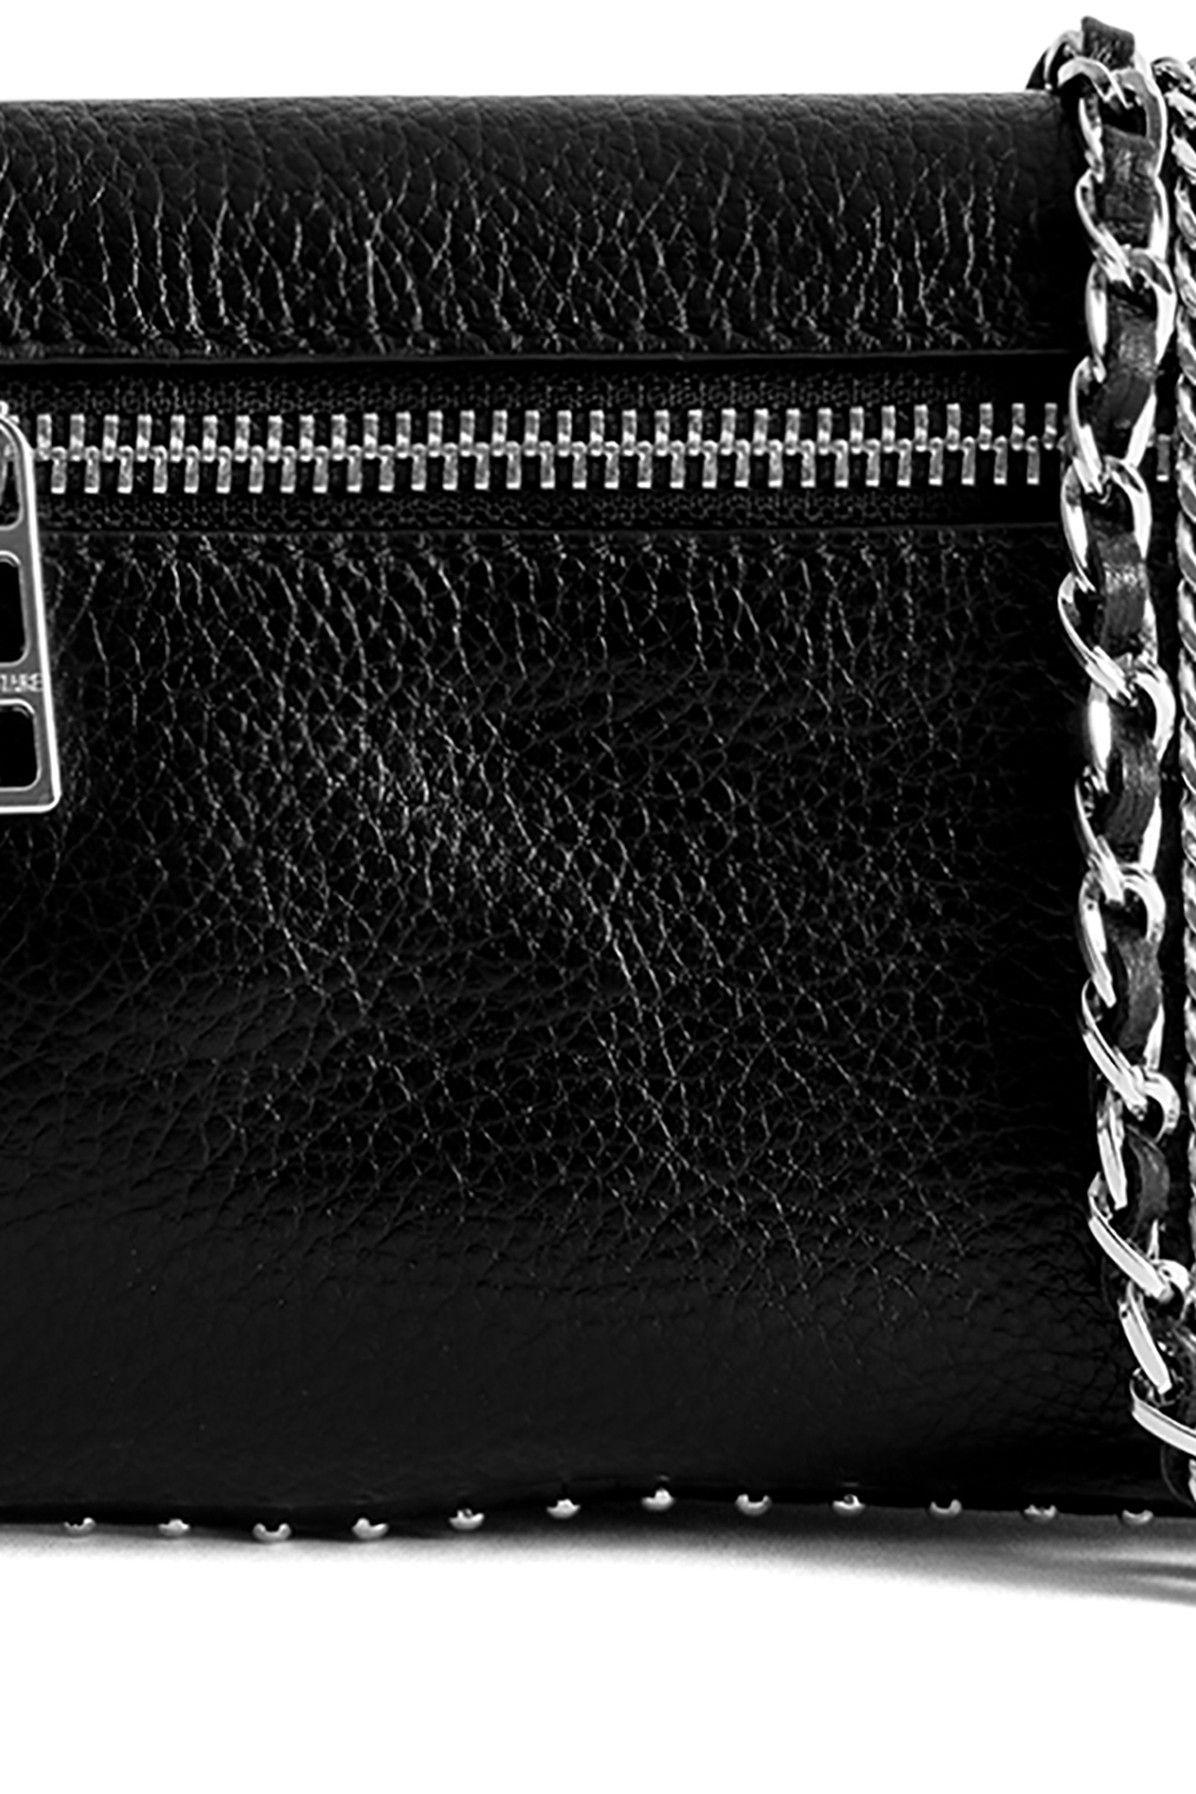 NWT Zadig & Voltaire Grained Leather Nano Rock Stud Clutch Crossbody Handbag